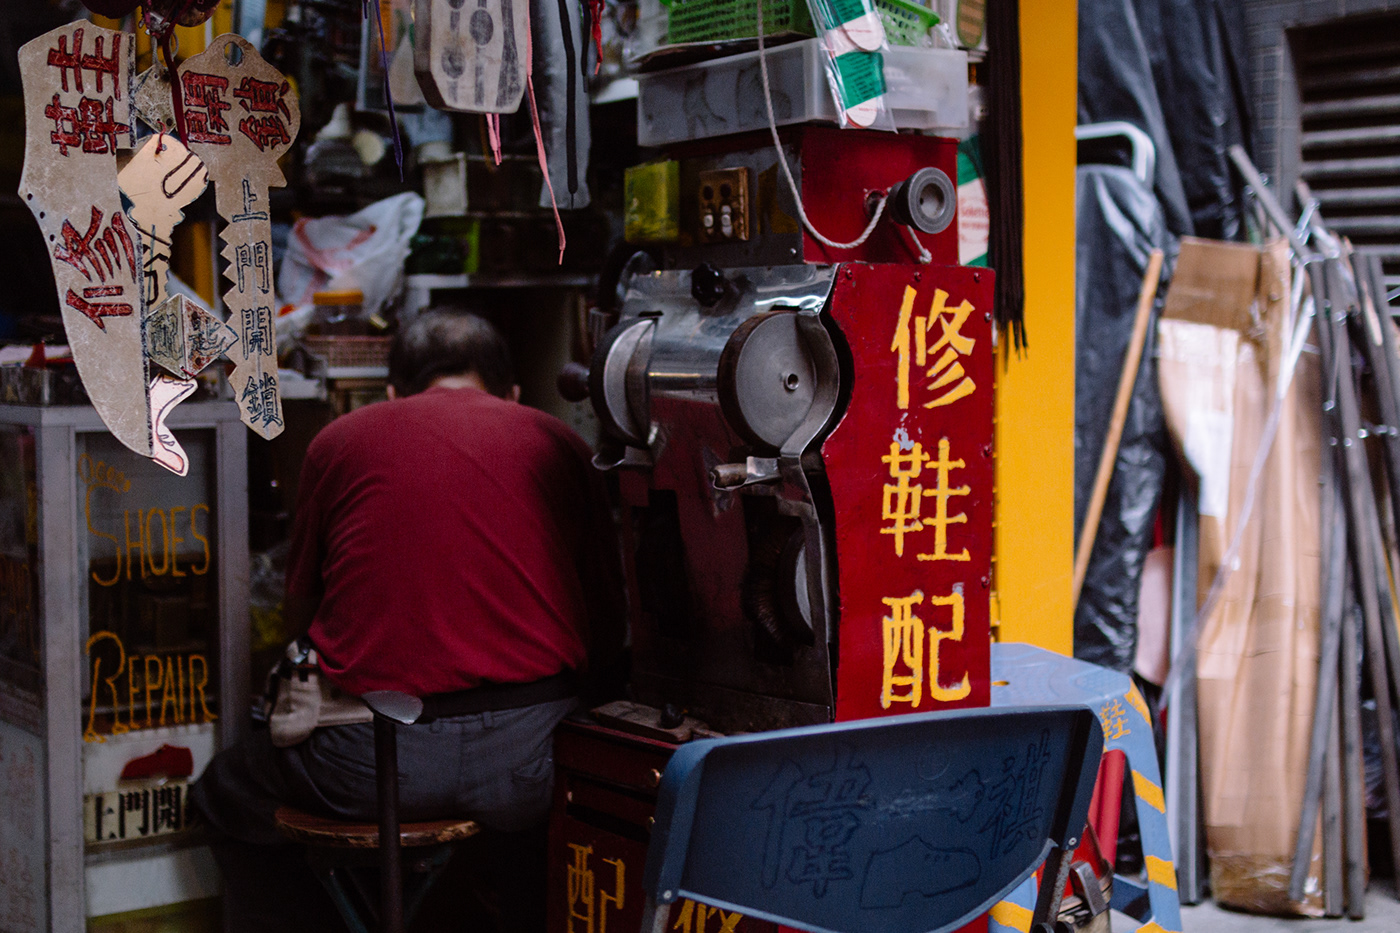 Hong Kong eugen males somnusor romania cluj-napoca cluj china Street lama island